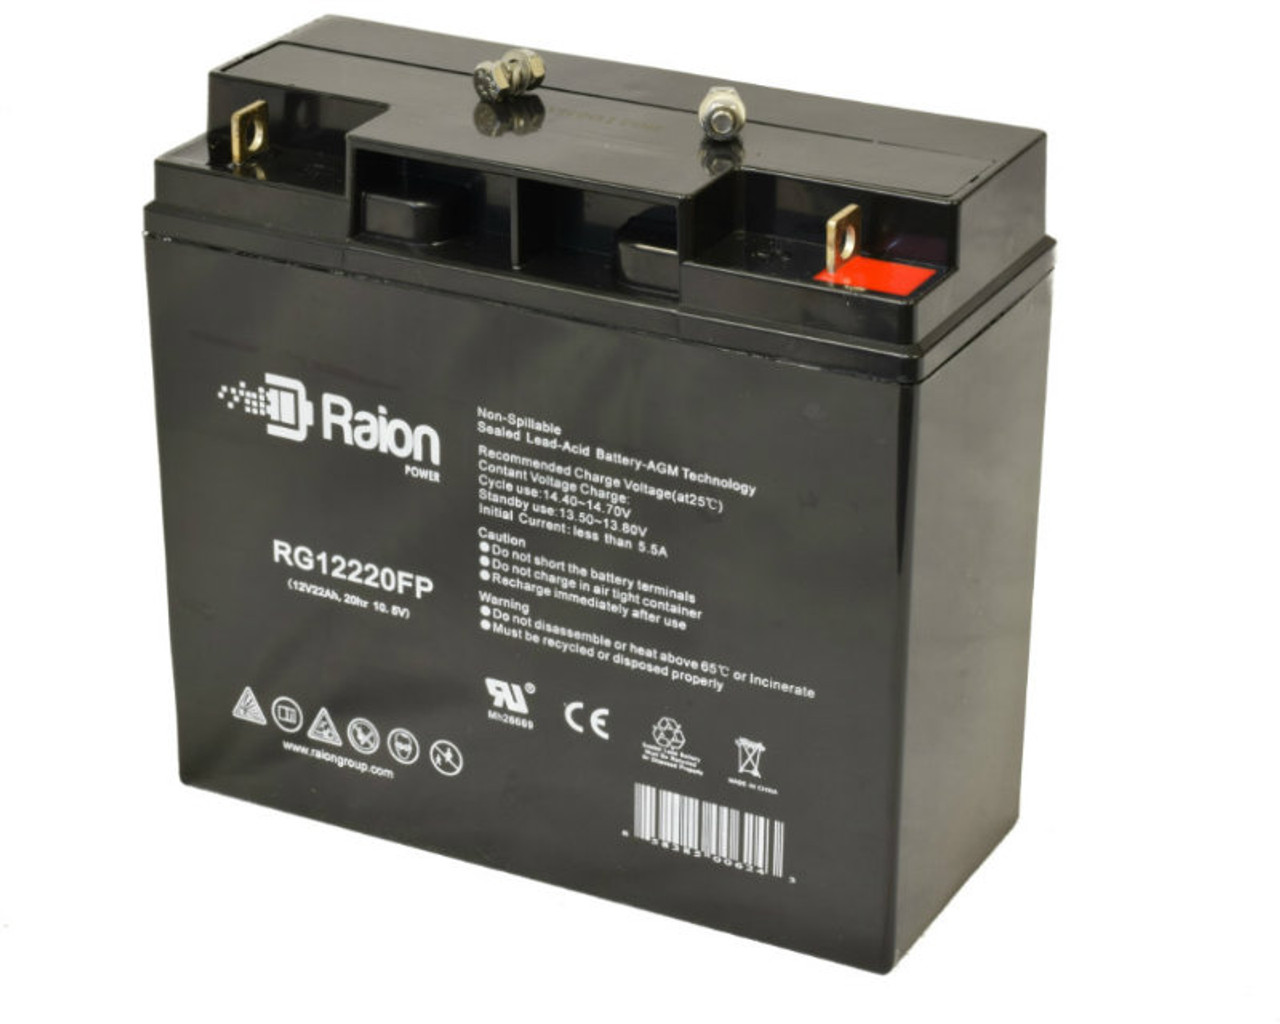 Raion Power RG12220FP 12V 22Ah Lead Acid Battery for DSR PSJ-4424 DC Power Source 4400